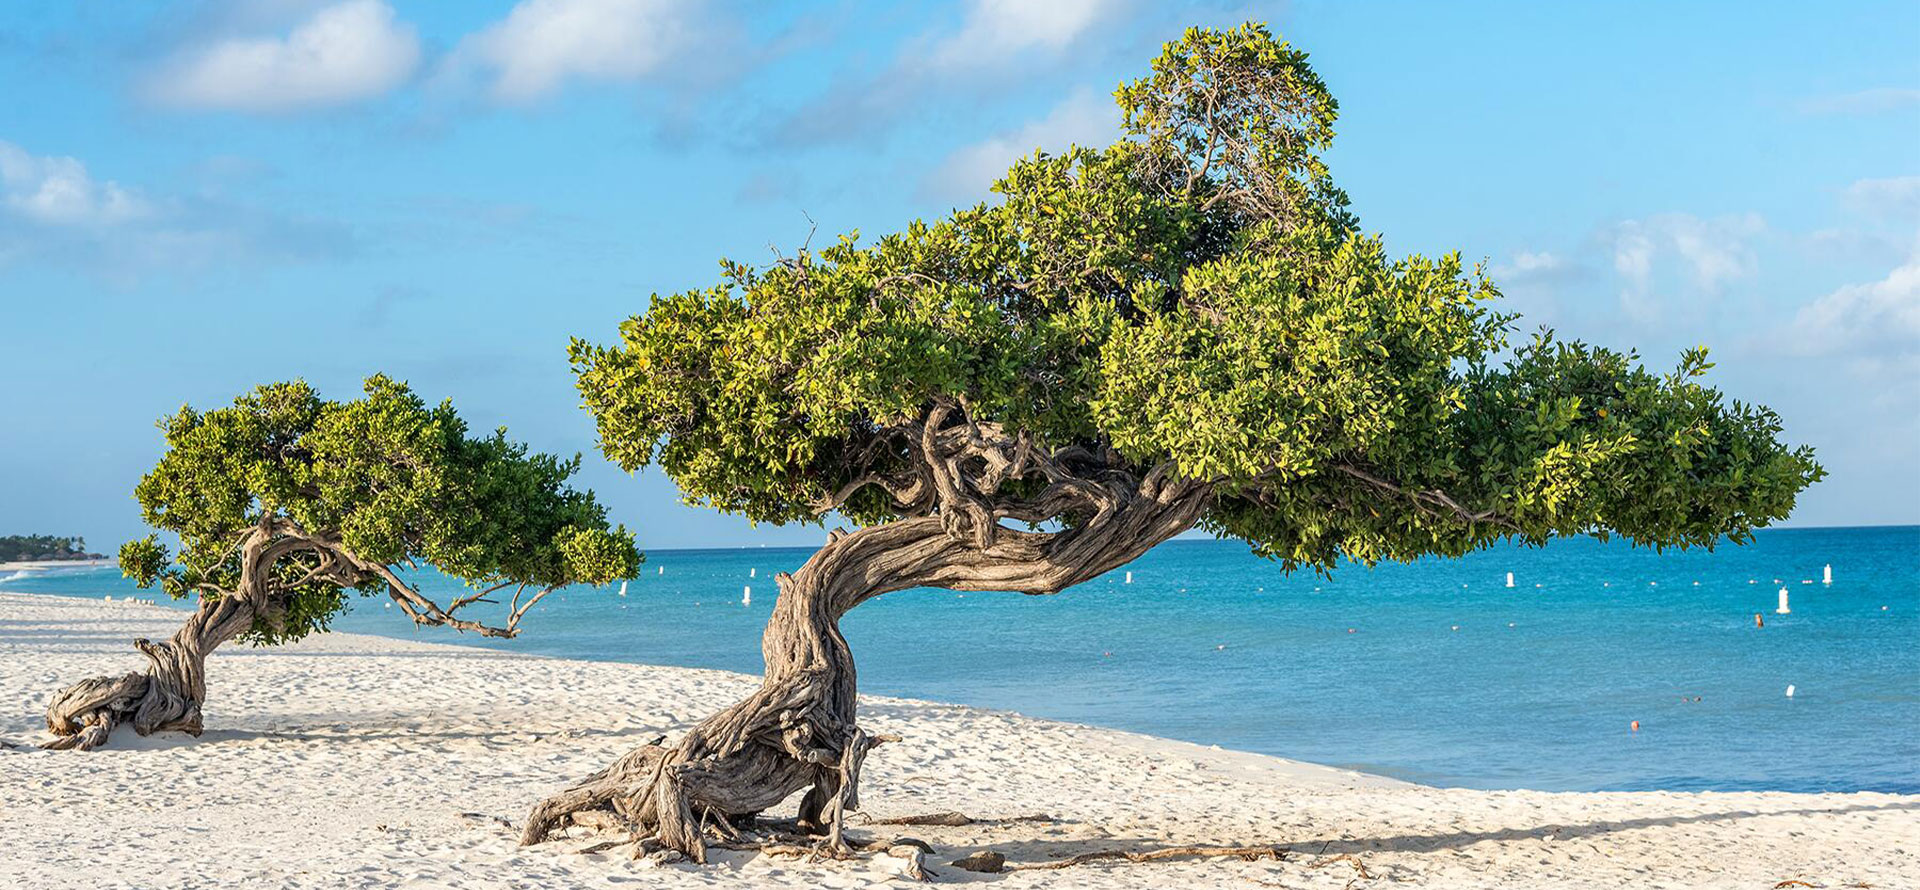 Aruba all-inclusive adults only resort beautiful tree.